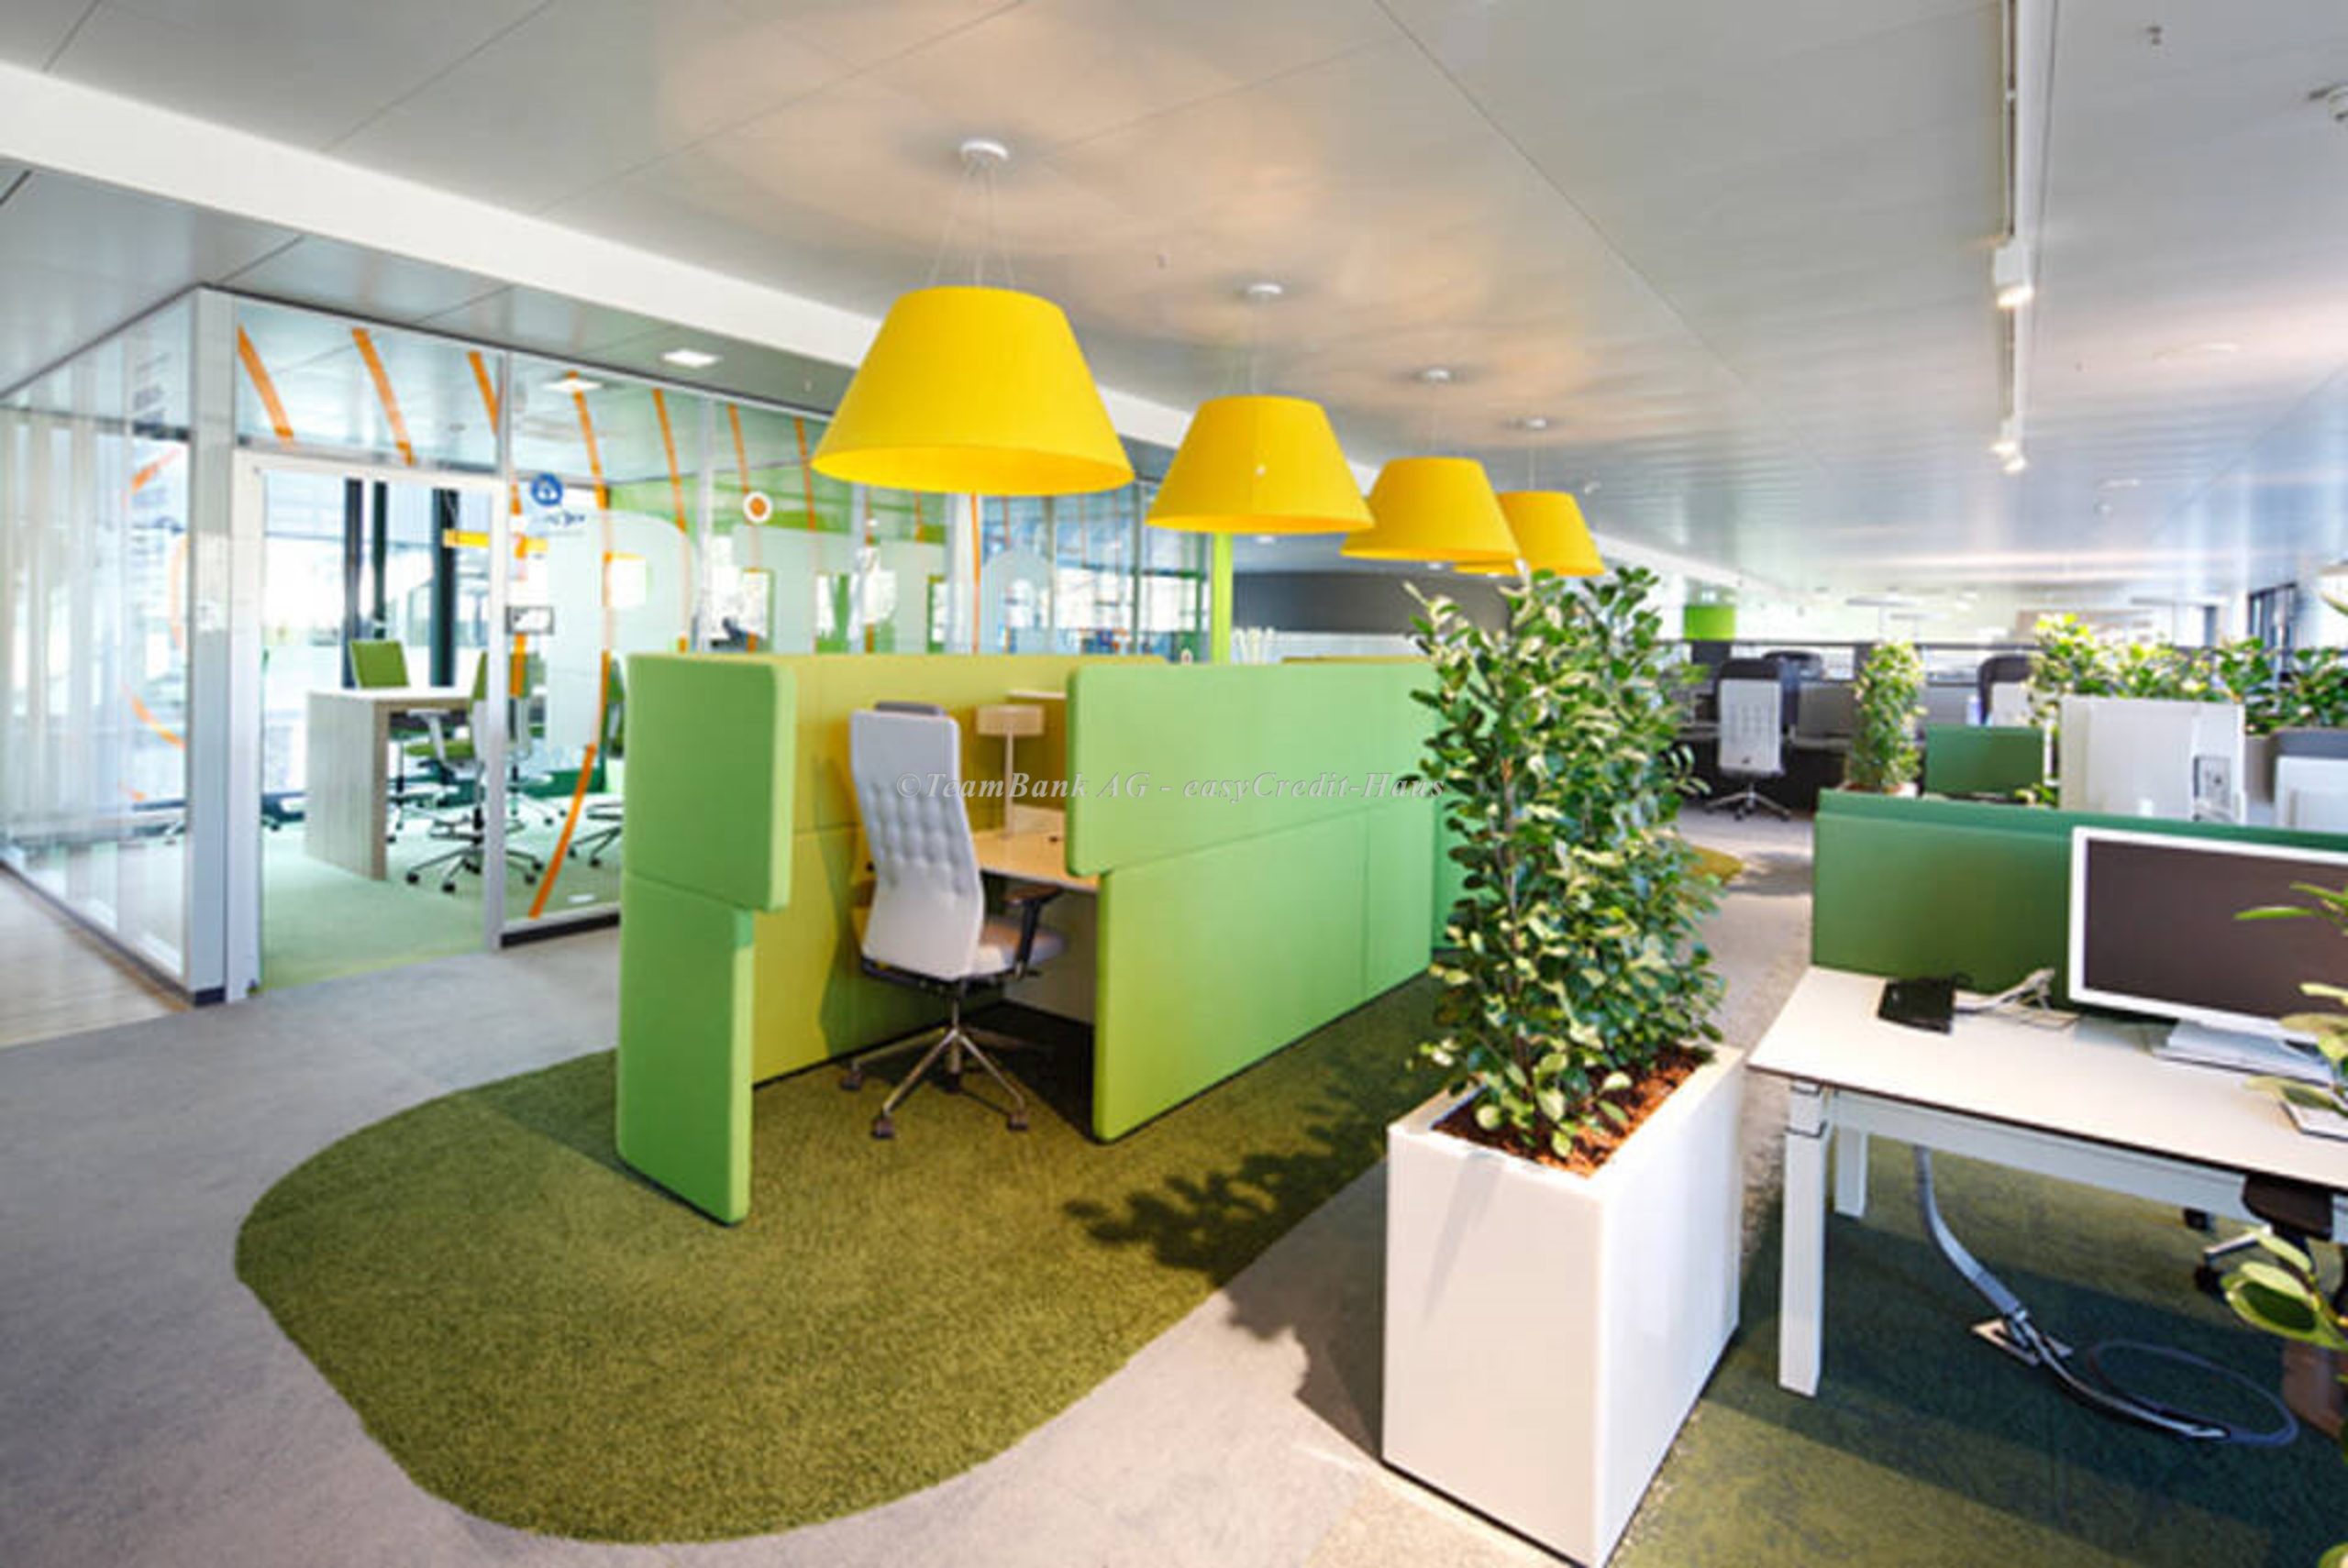 Büropflanzen trennen offene Büroflächen von Bürozellen (